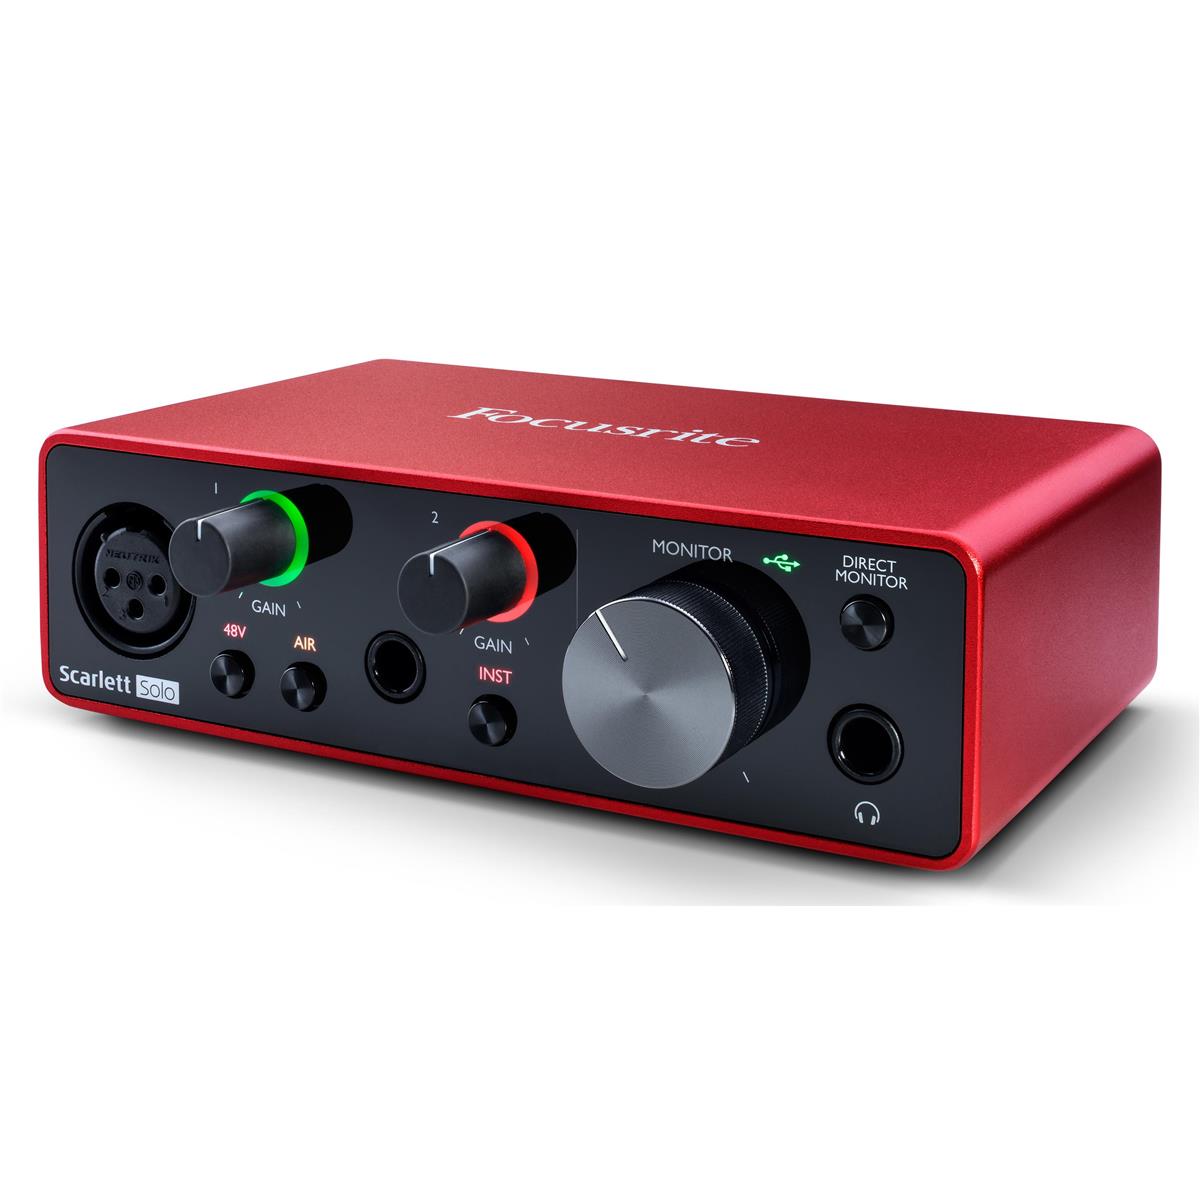 Rare deal drops Focusrite's popular 2i2 Scarlett 3rd Gen audio interface to  $130 (Reg. $190)